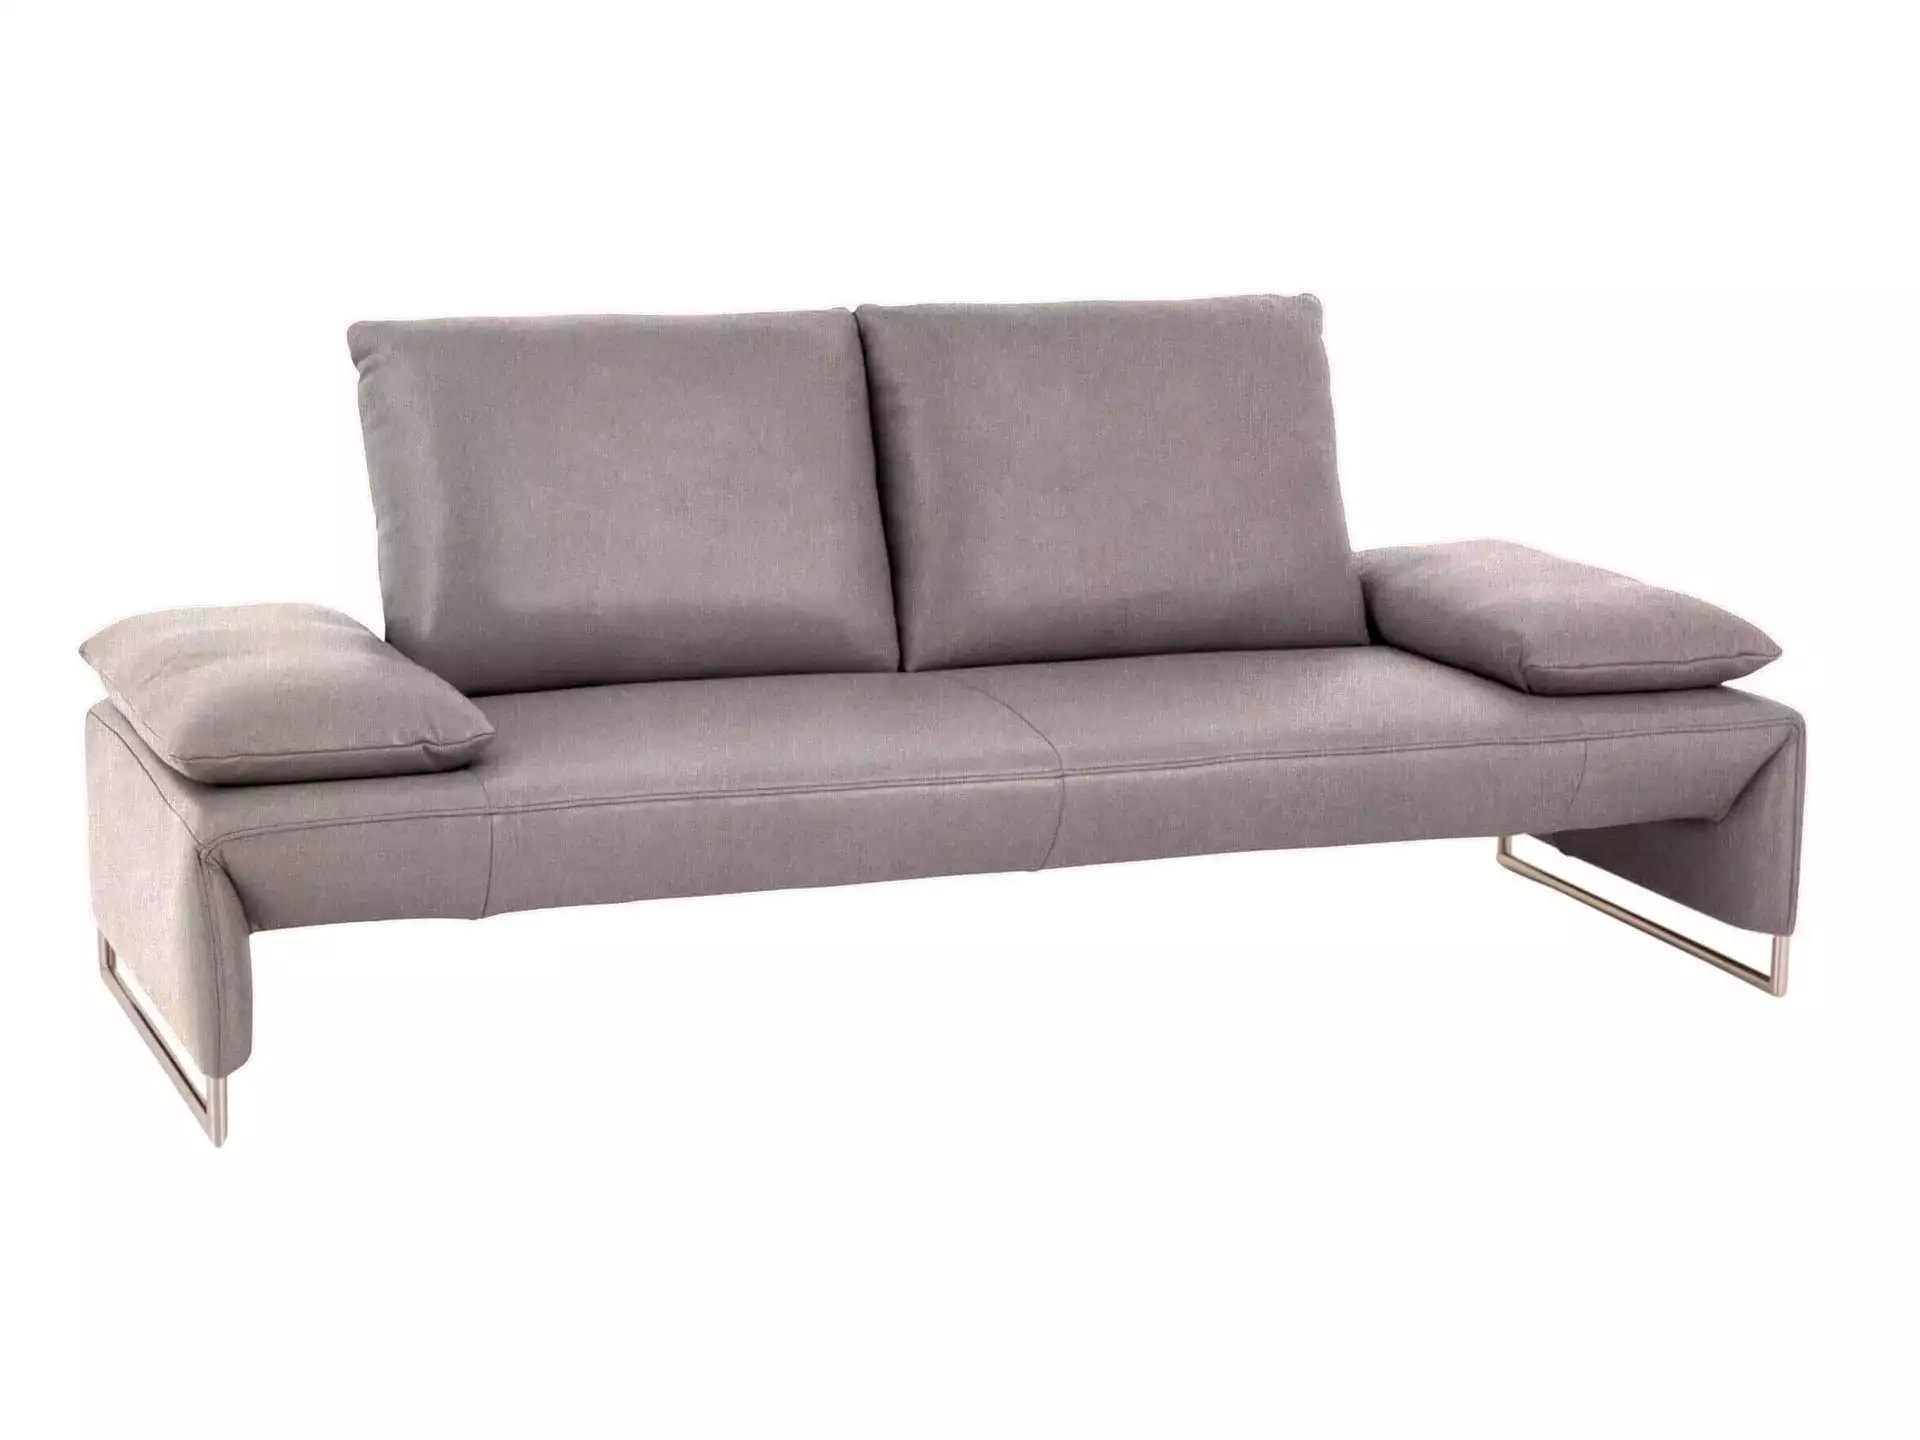 Sofa Ramano Basic B: 220 cm Koinor / Farbe: Grau / Material: Stoff Basic